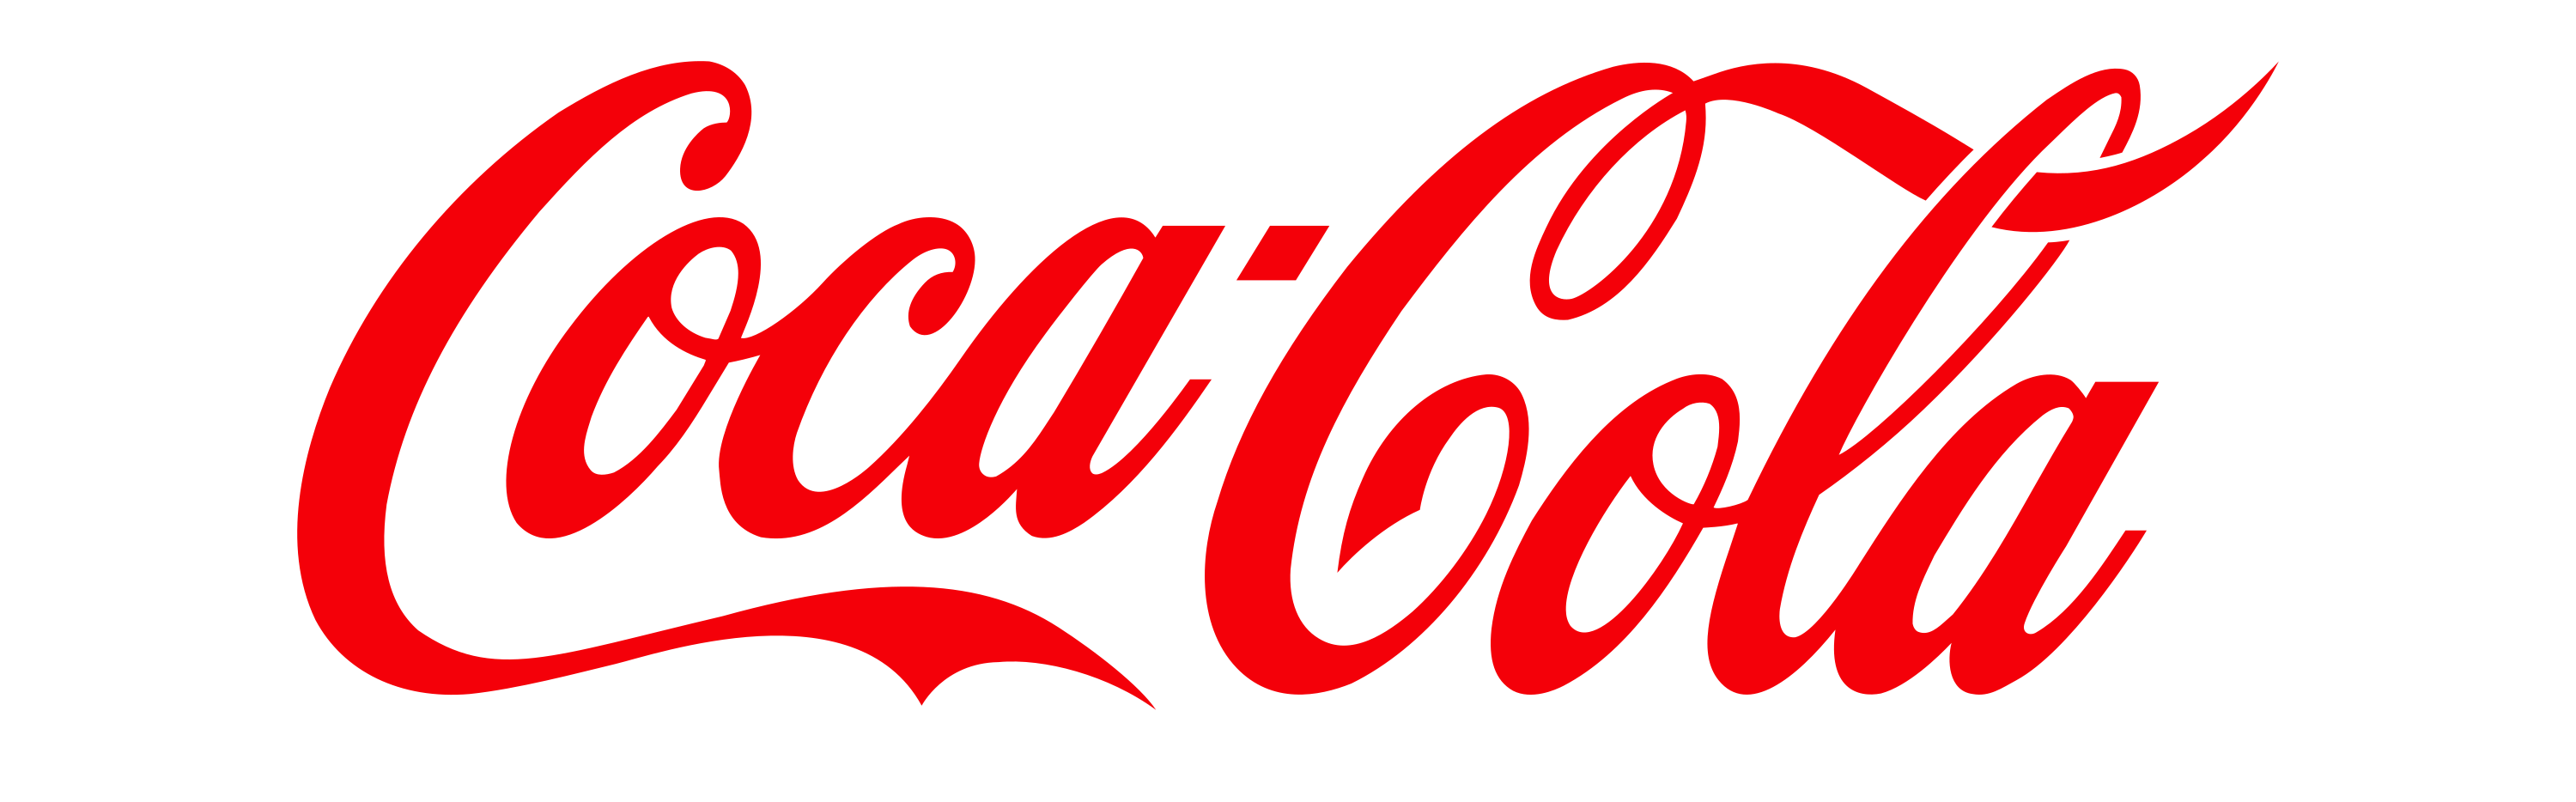 Coca-Cola-Logo-wine (1)